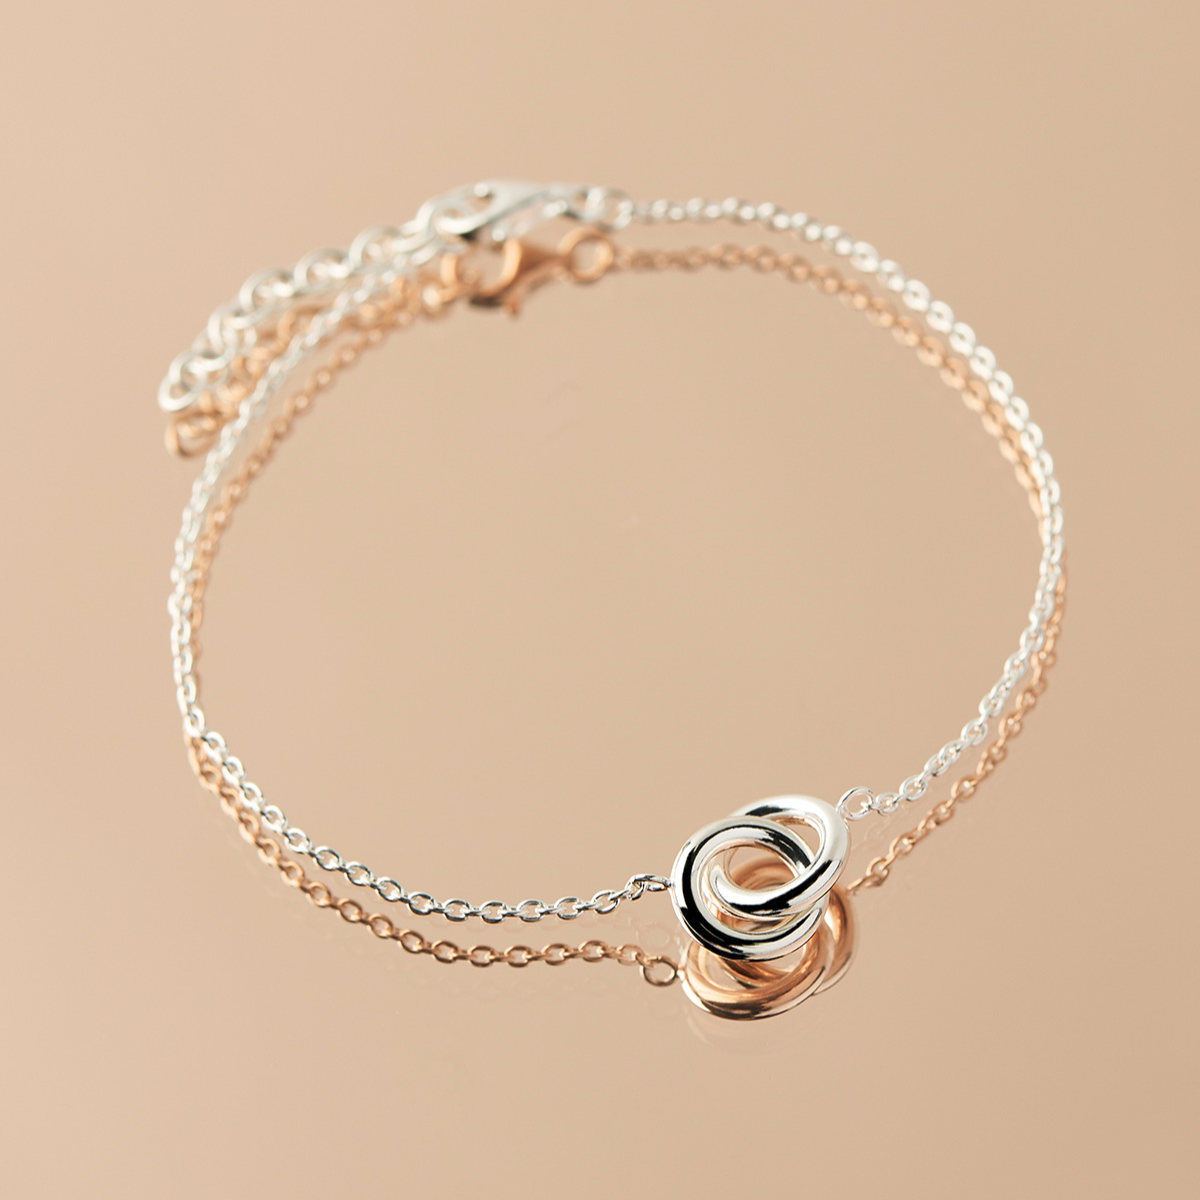 Silver interlocked rings bracelet